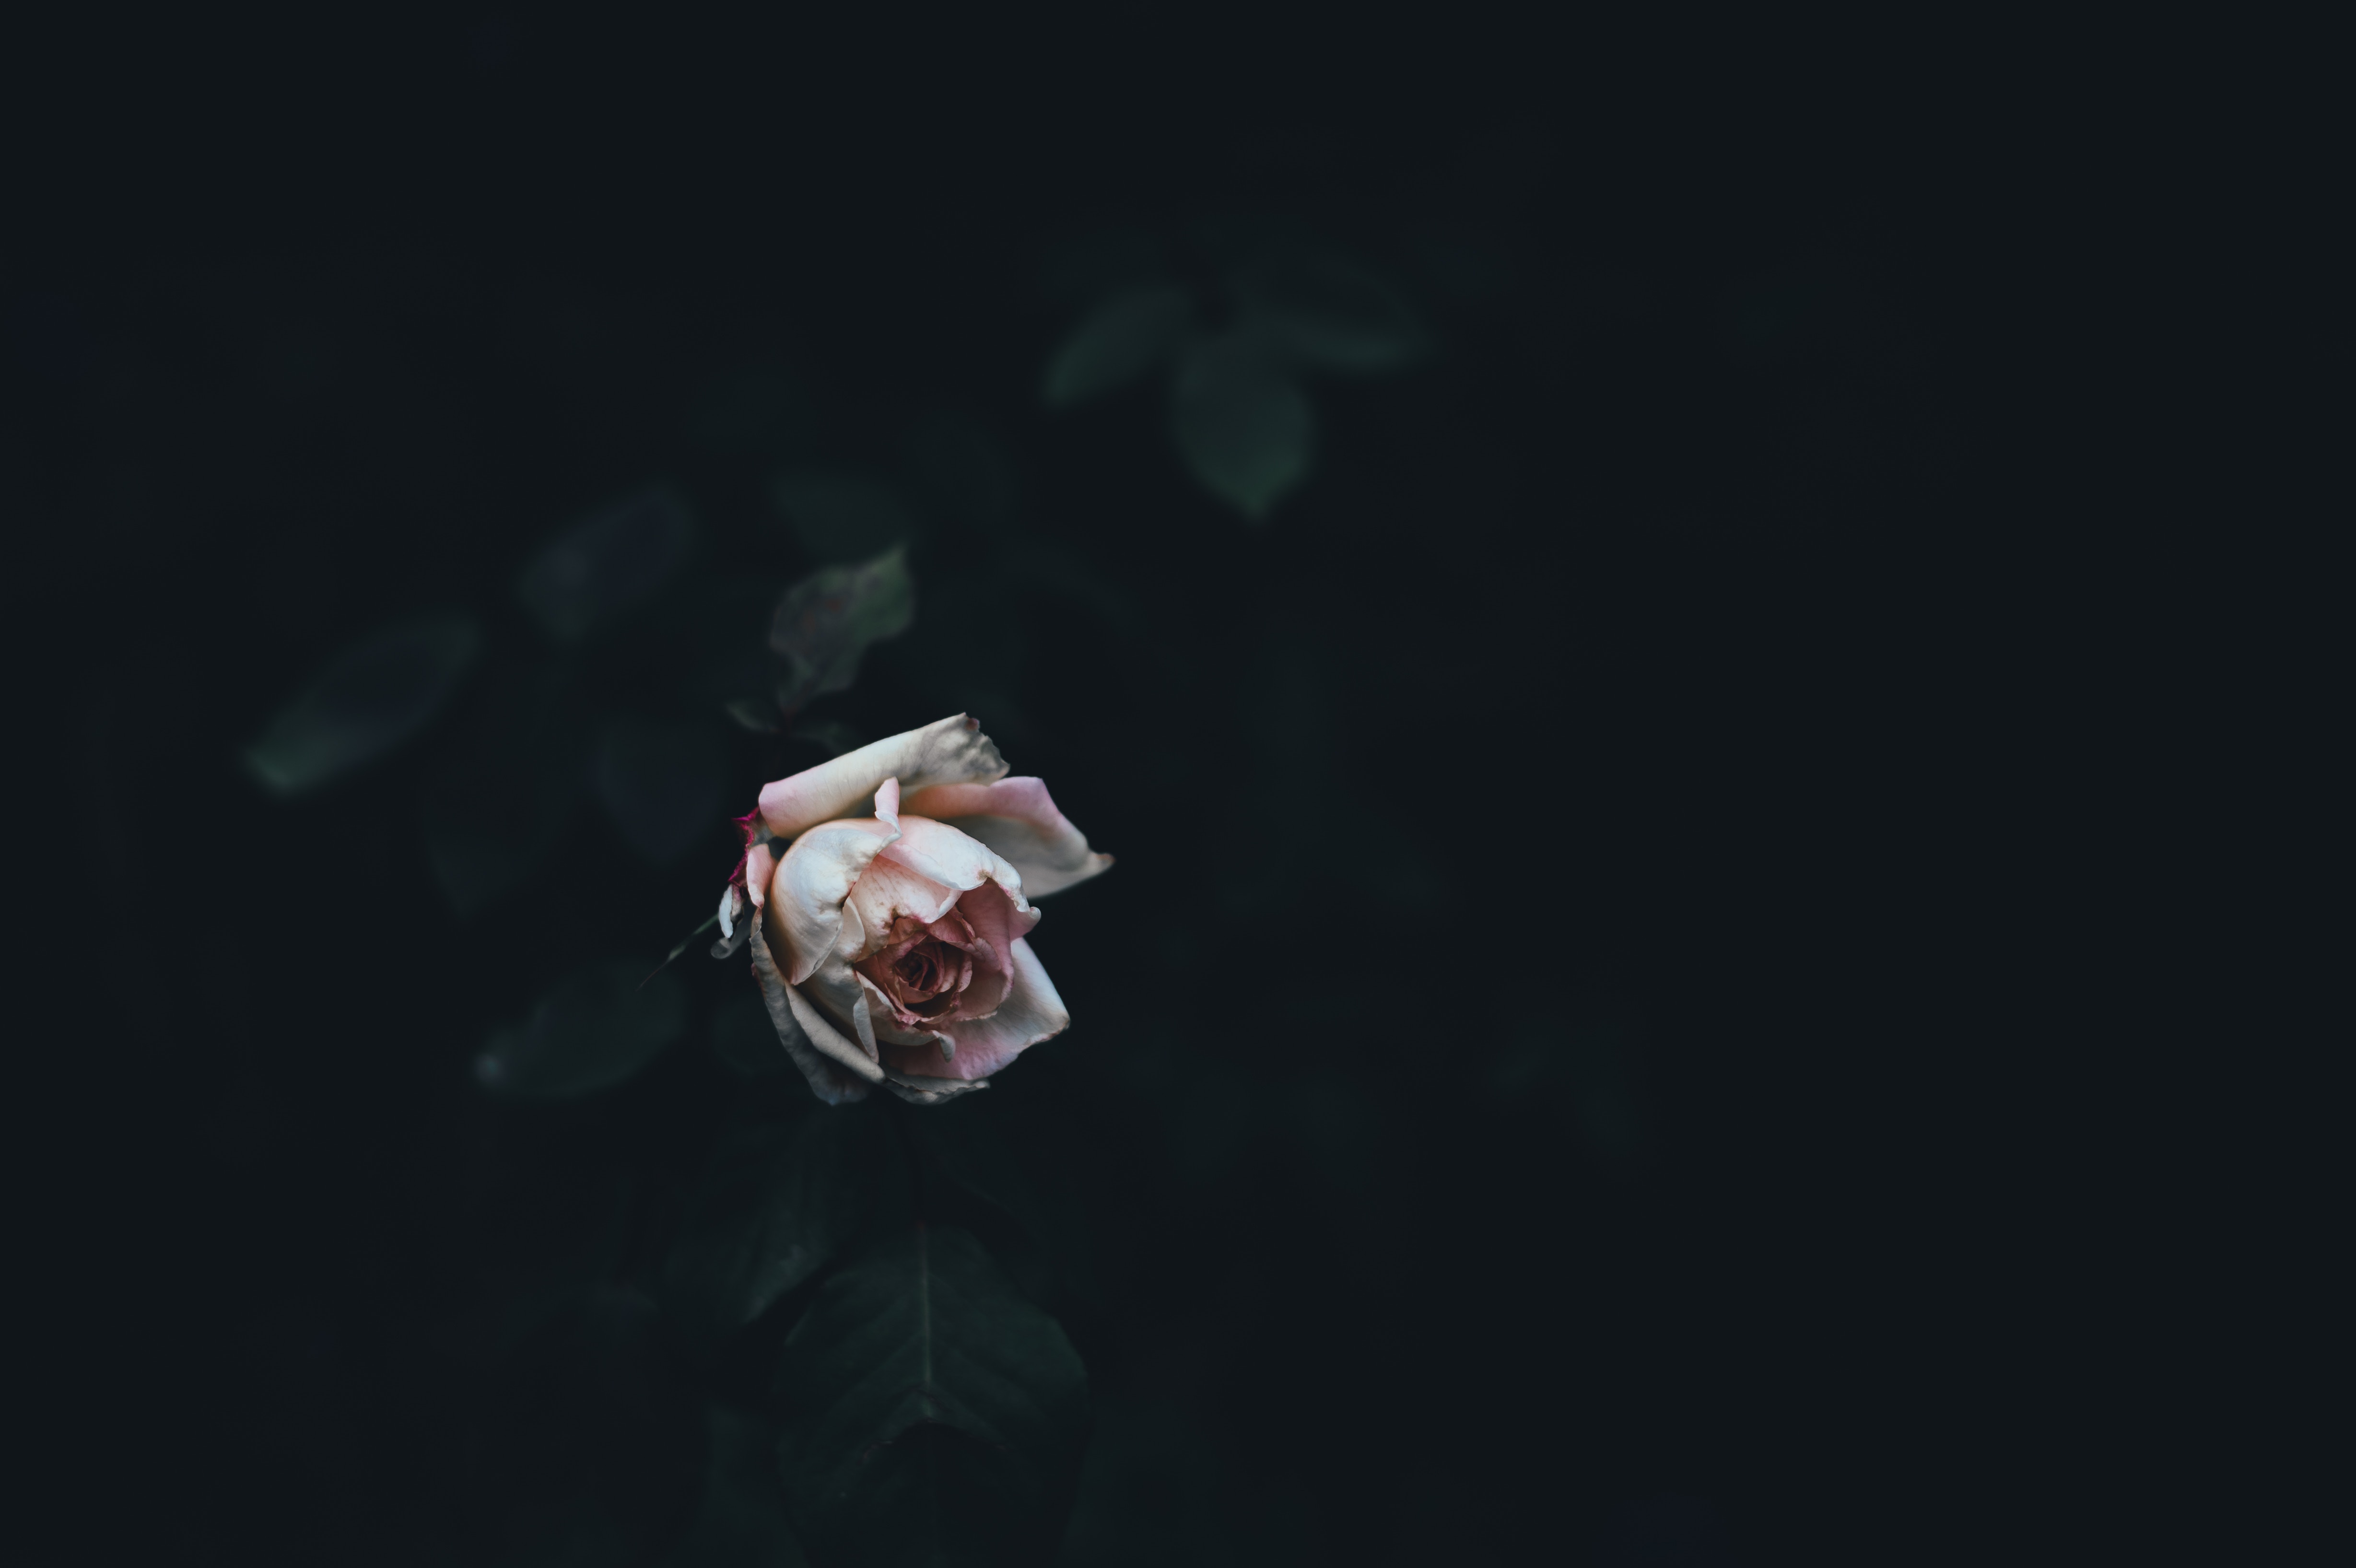 4913x3270 #flower, #die, #PNG image, #contrast, #wilt, #rose, # dying, #leafe, #nature, #dark, #black background HD Wallpaper